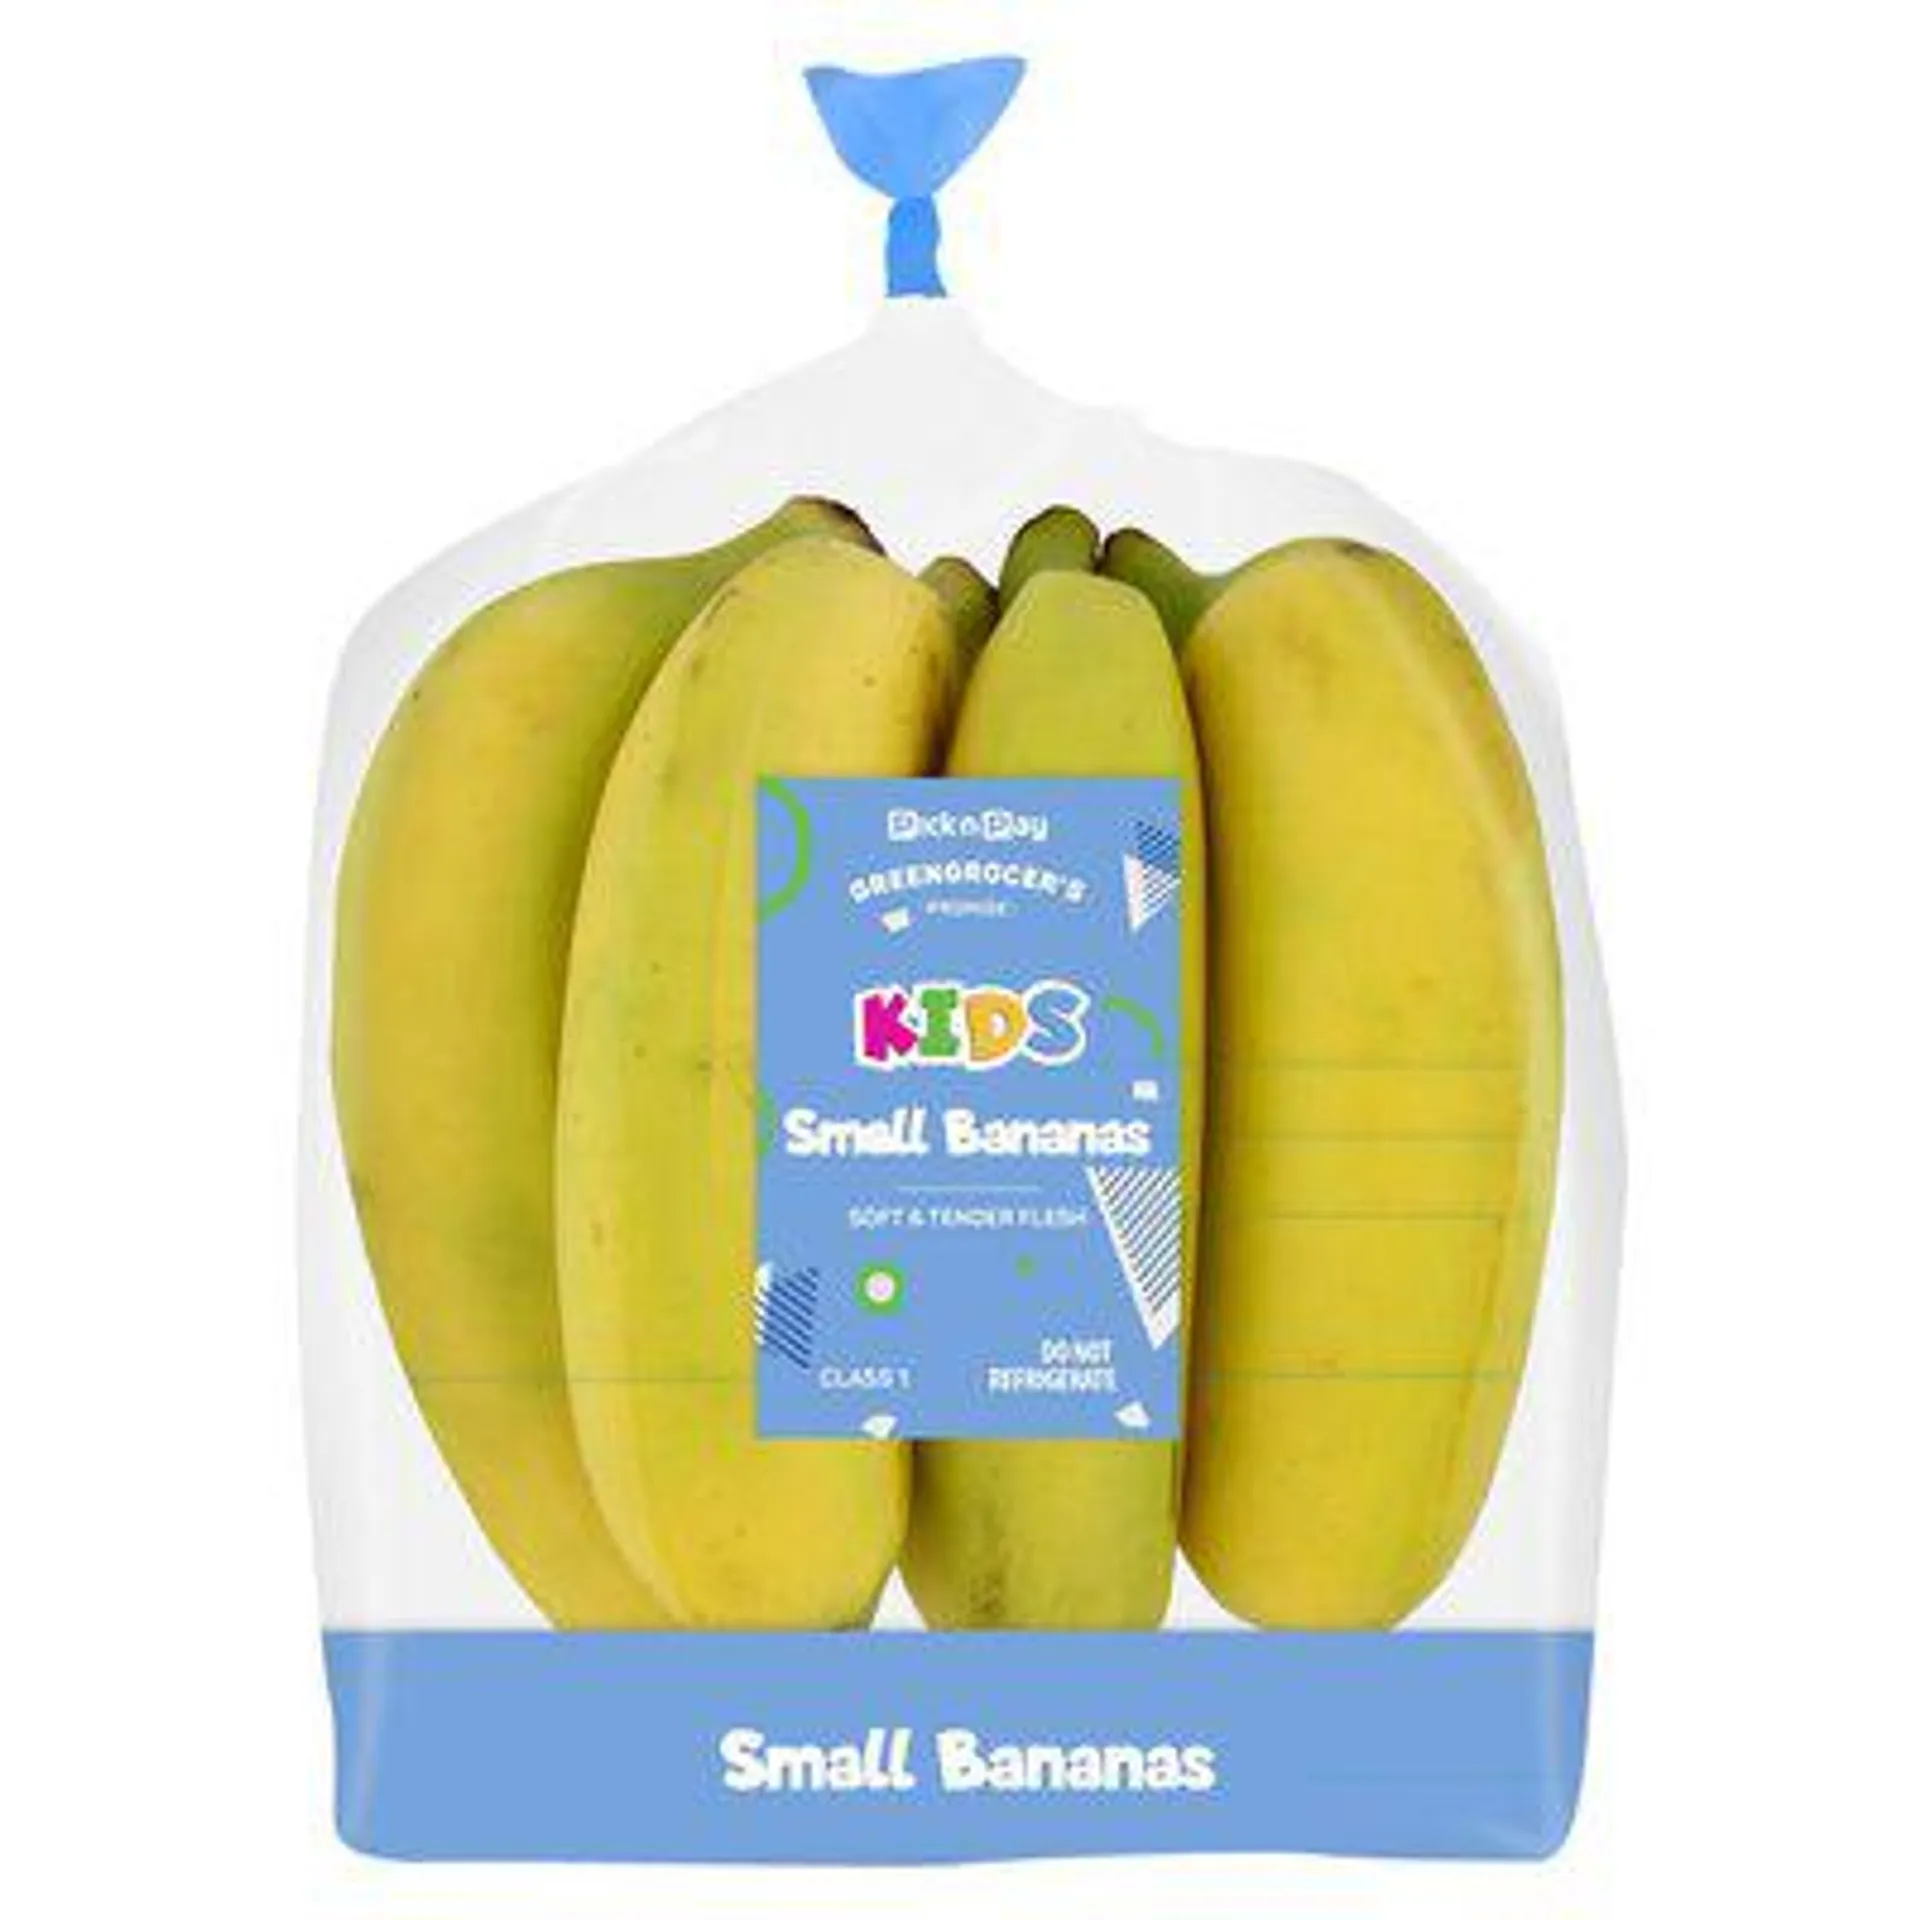 PnP Kids Small Bananas